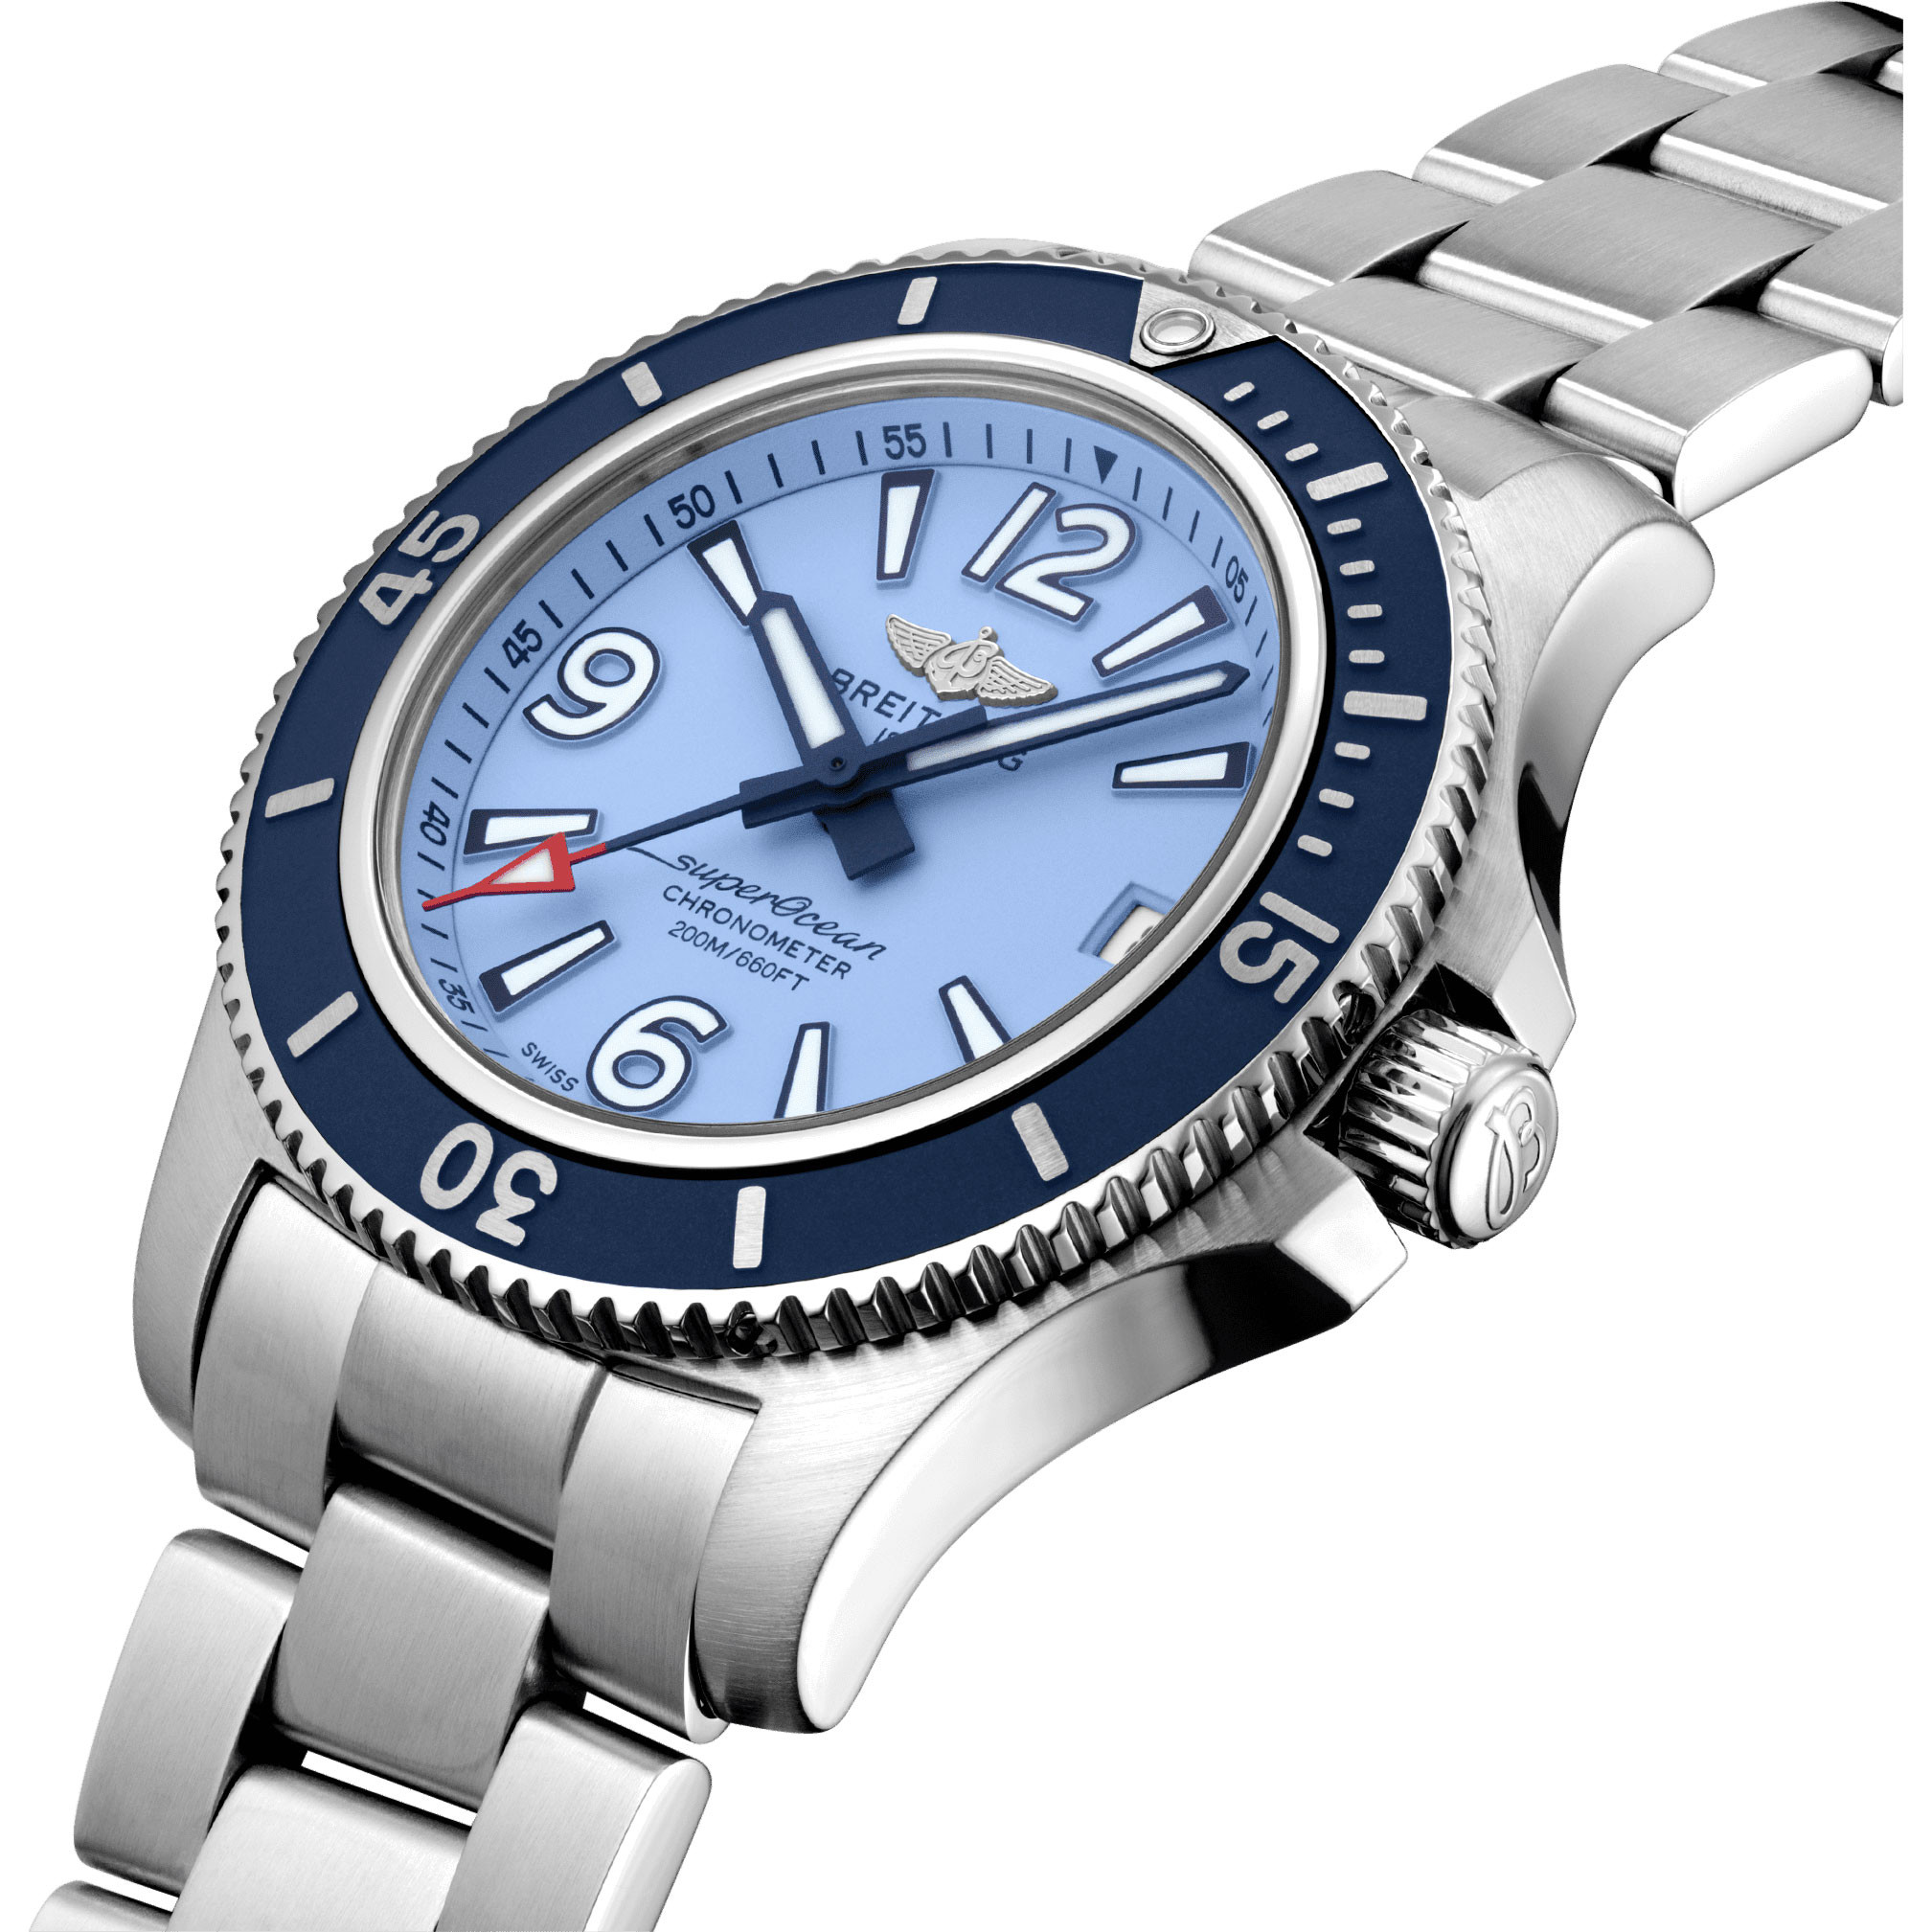 The 36 mm replica watch has light blue dial.